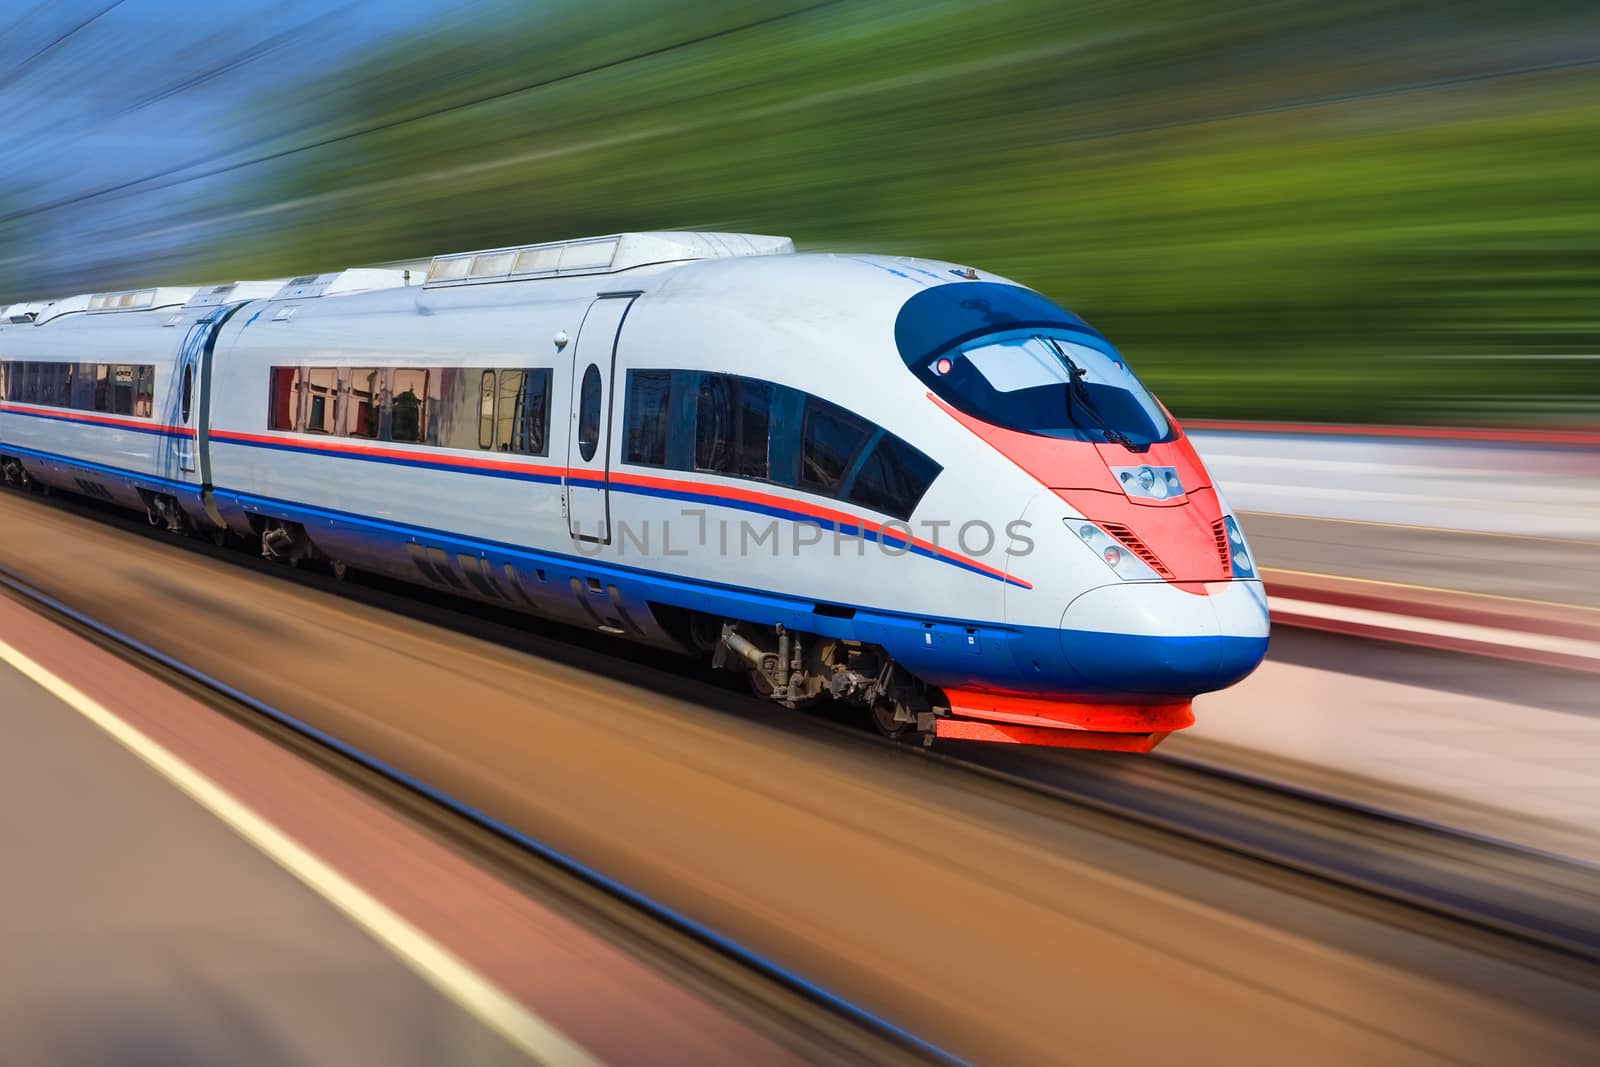 Beautiful photo of high speed modern commuter train, motion blur